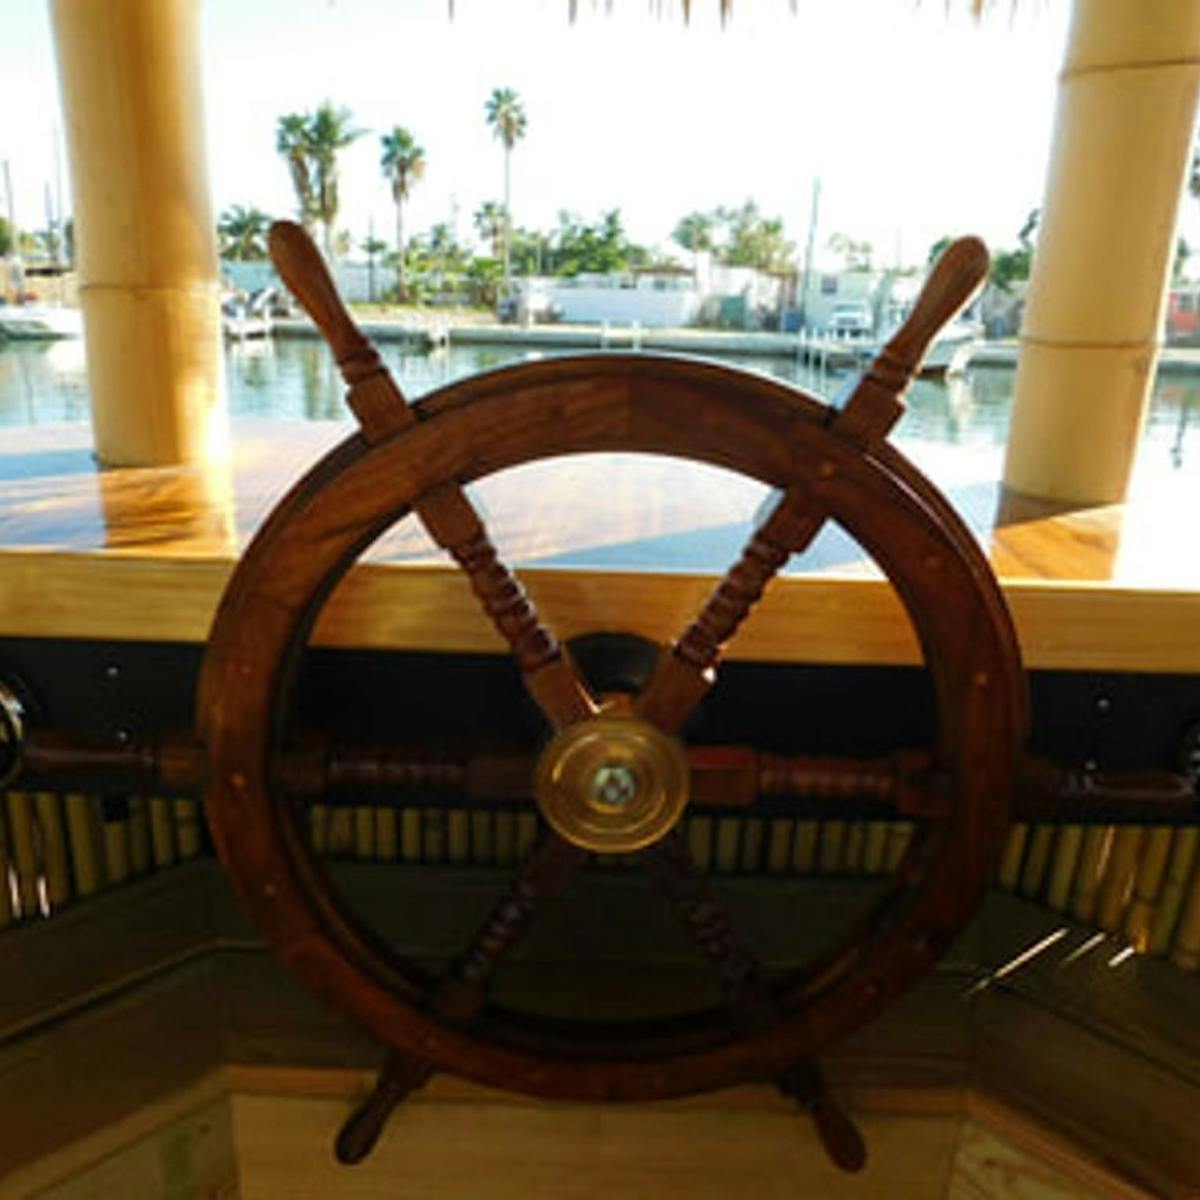 the boat's steering wheel